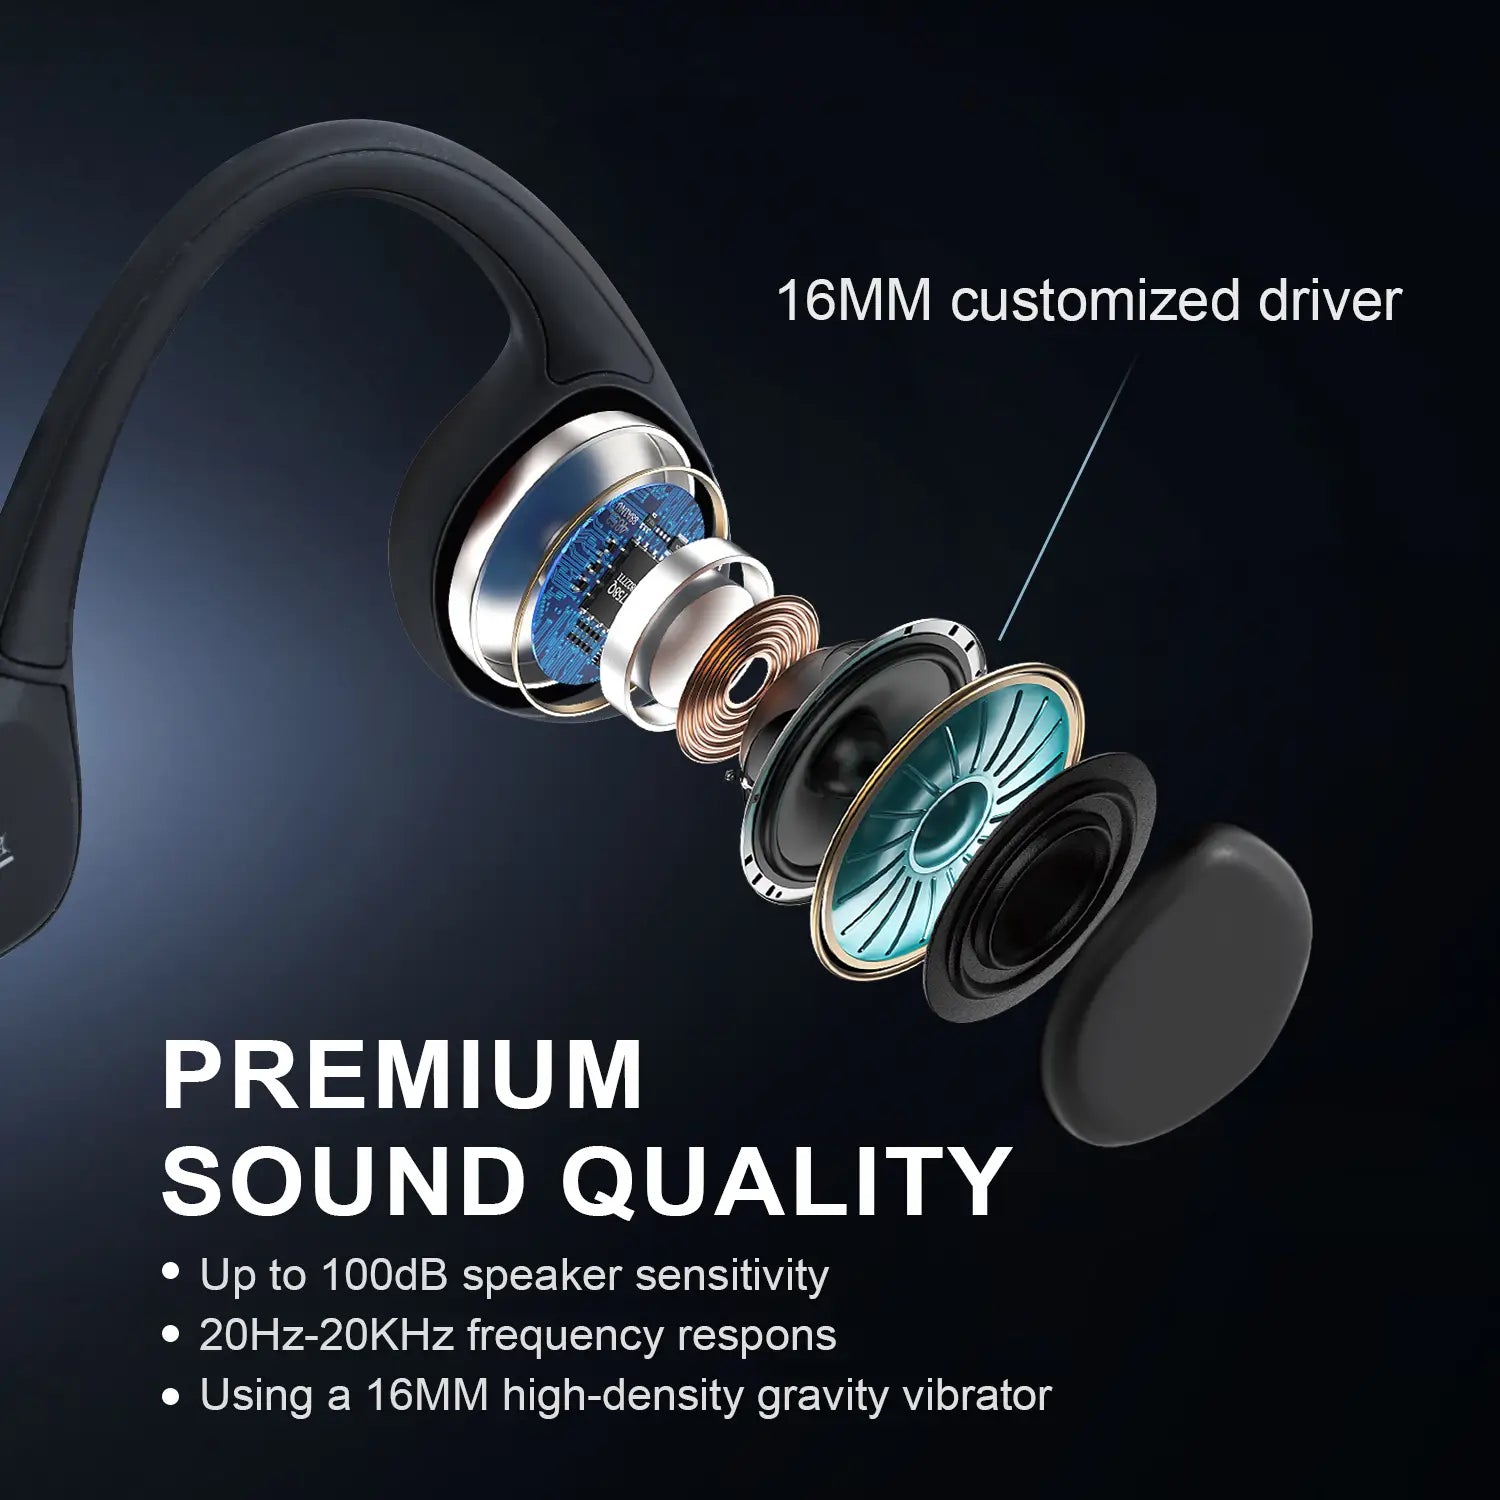 Tousains bone conduction headphones with premium sound quality